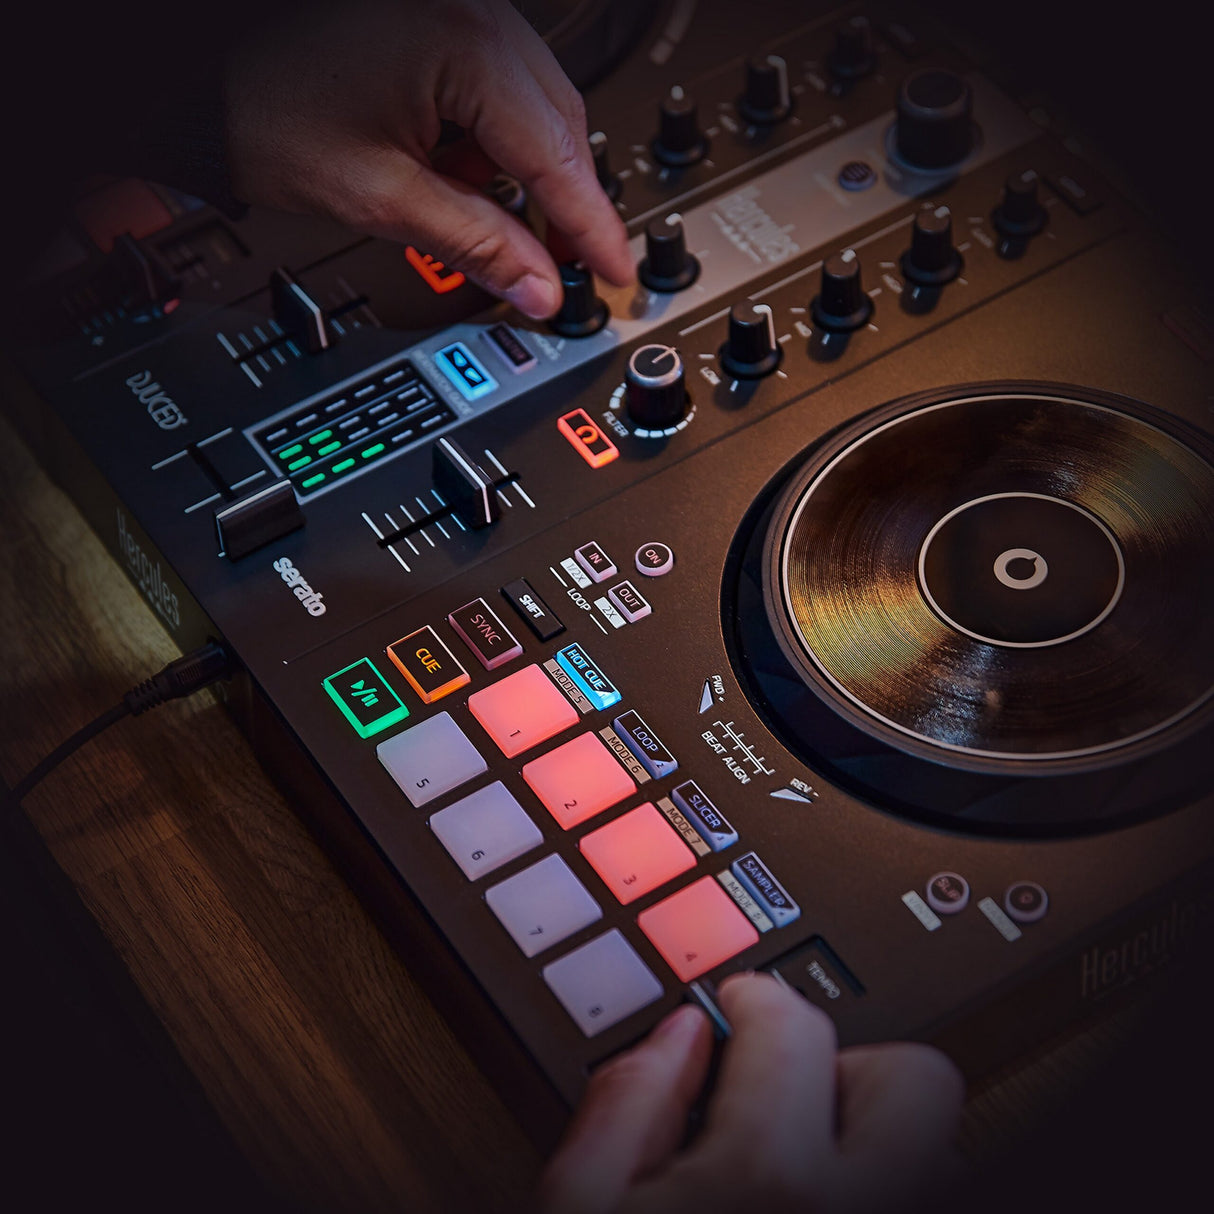 Hercules DJControl Inpulse 300 MK2 2-Channel DJ Controller with Serato DJ Lite/DJUCED